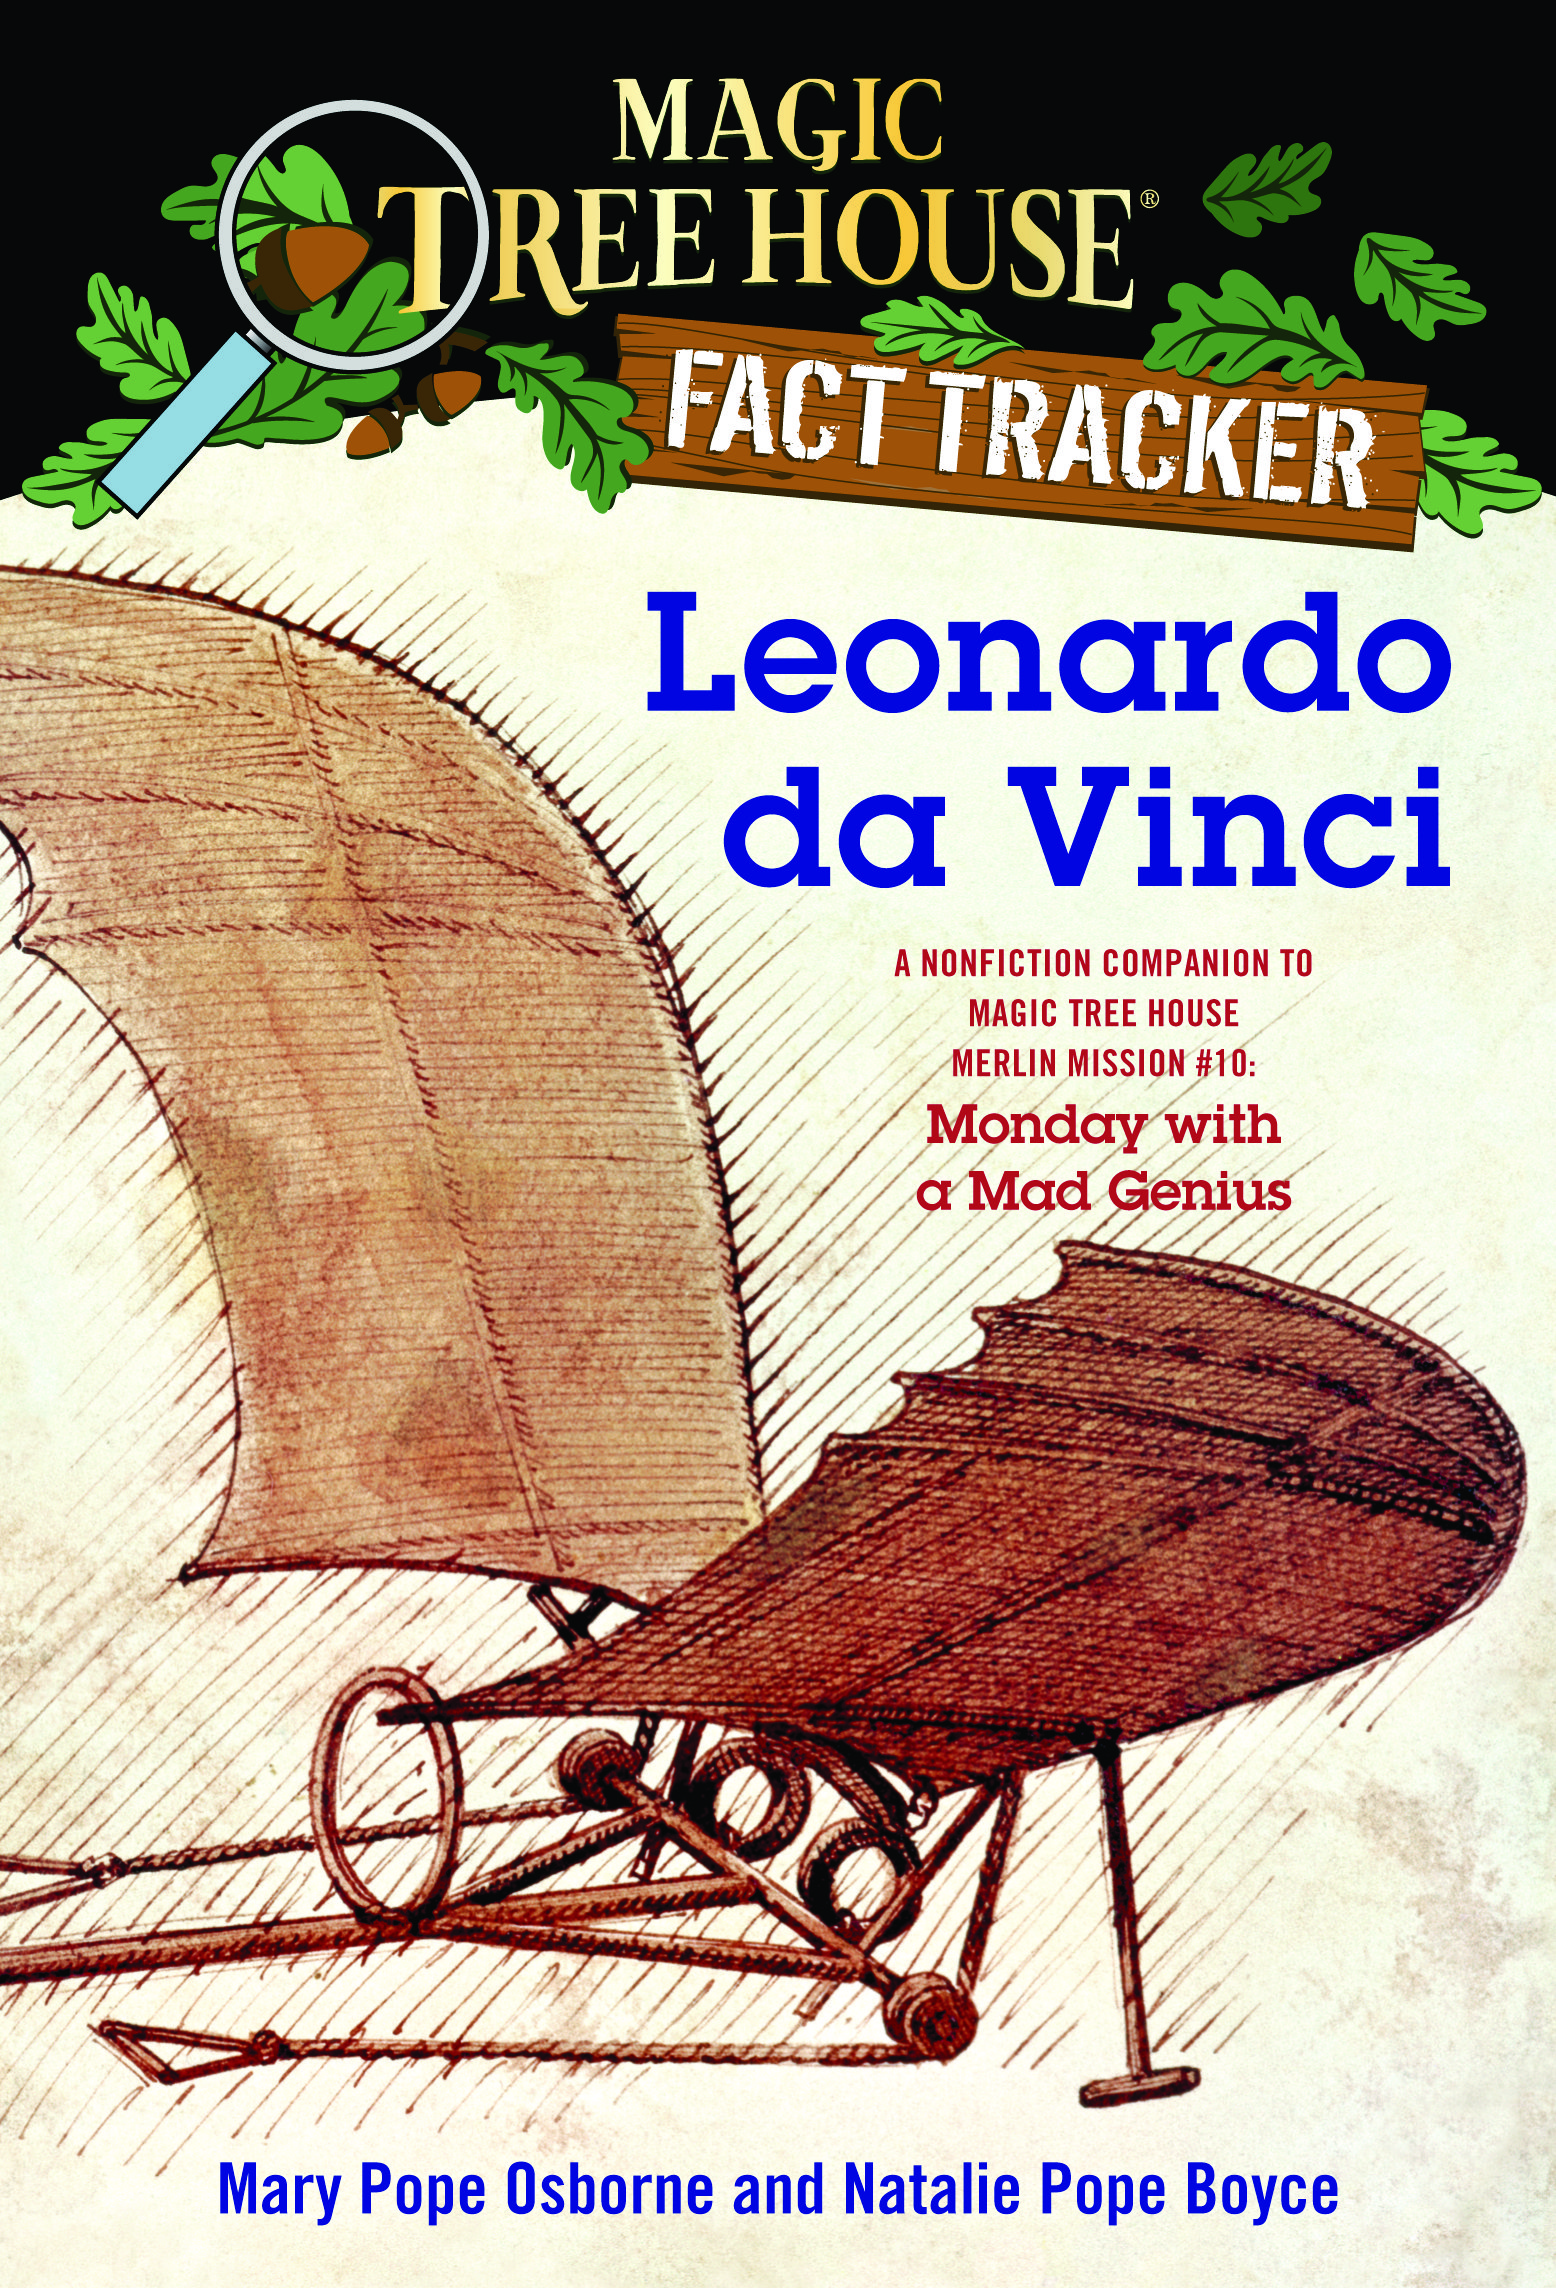 Magic Tree House Fact Tracker #19 Leonardo da Vinci